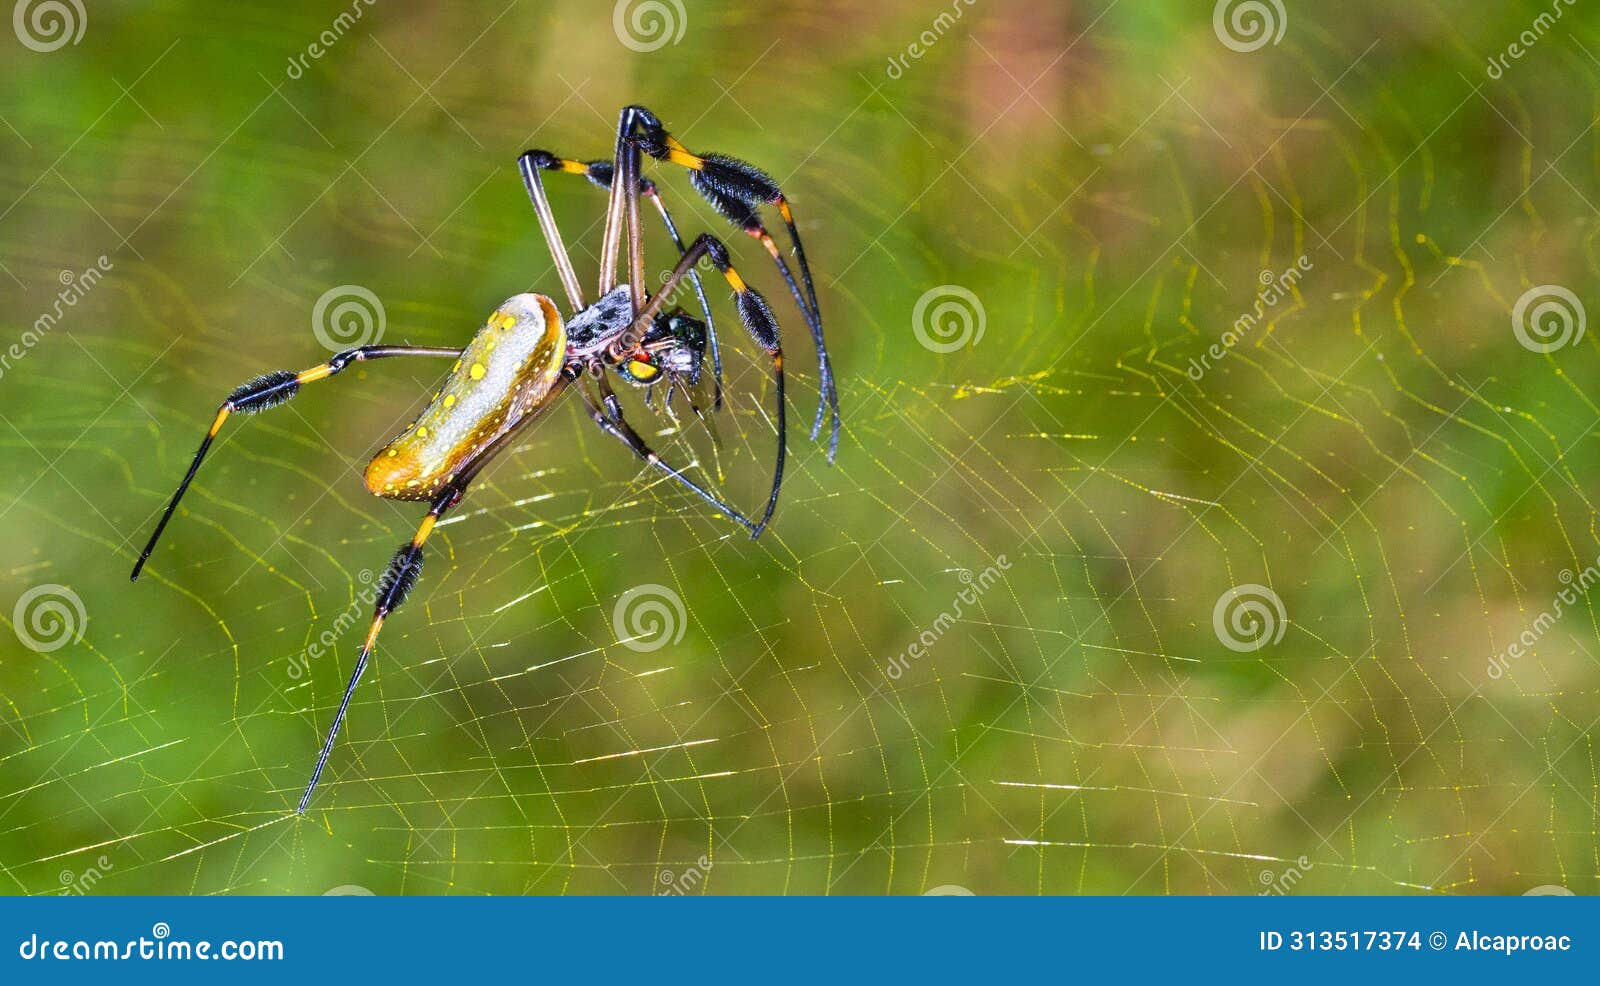 golden orb-web spider, marino ballena national park